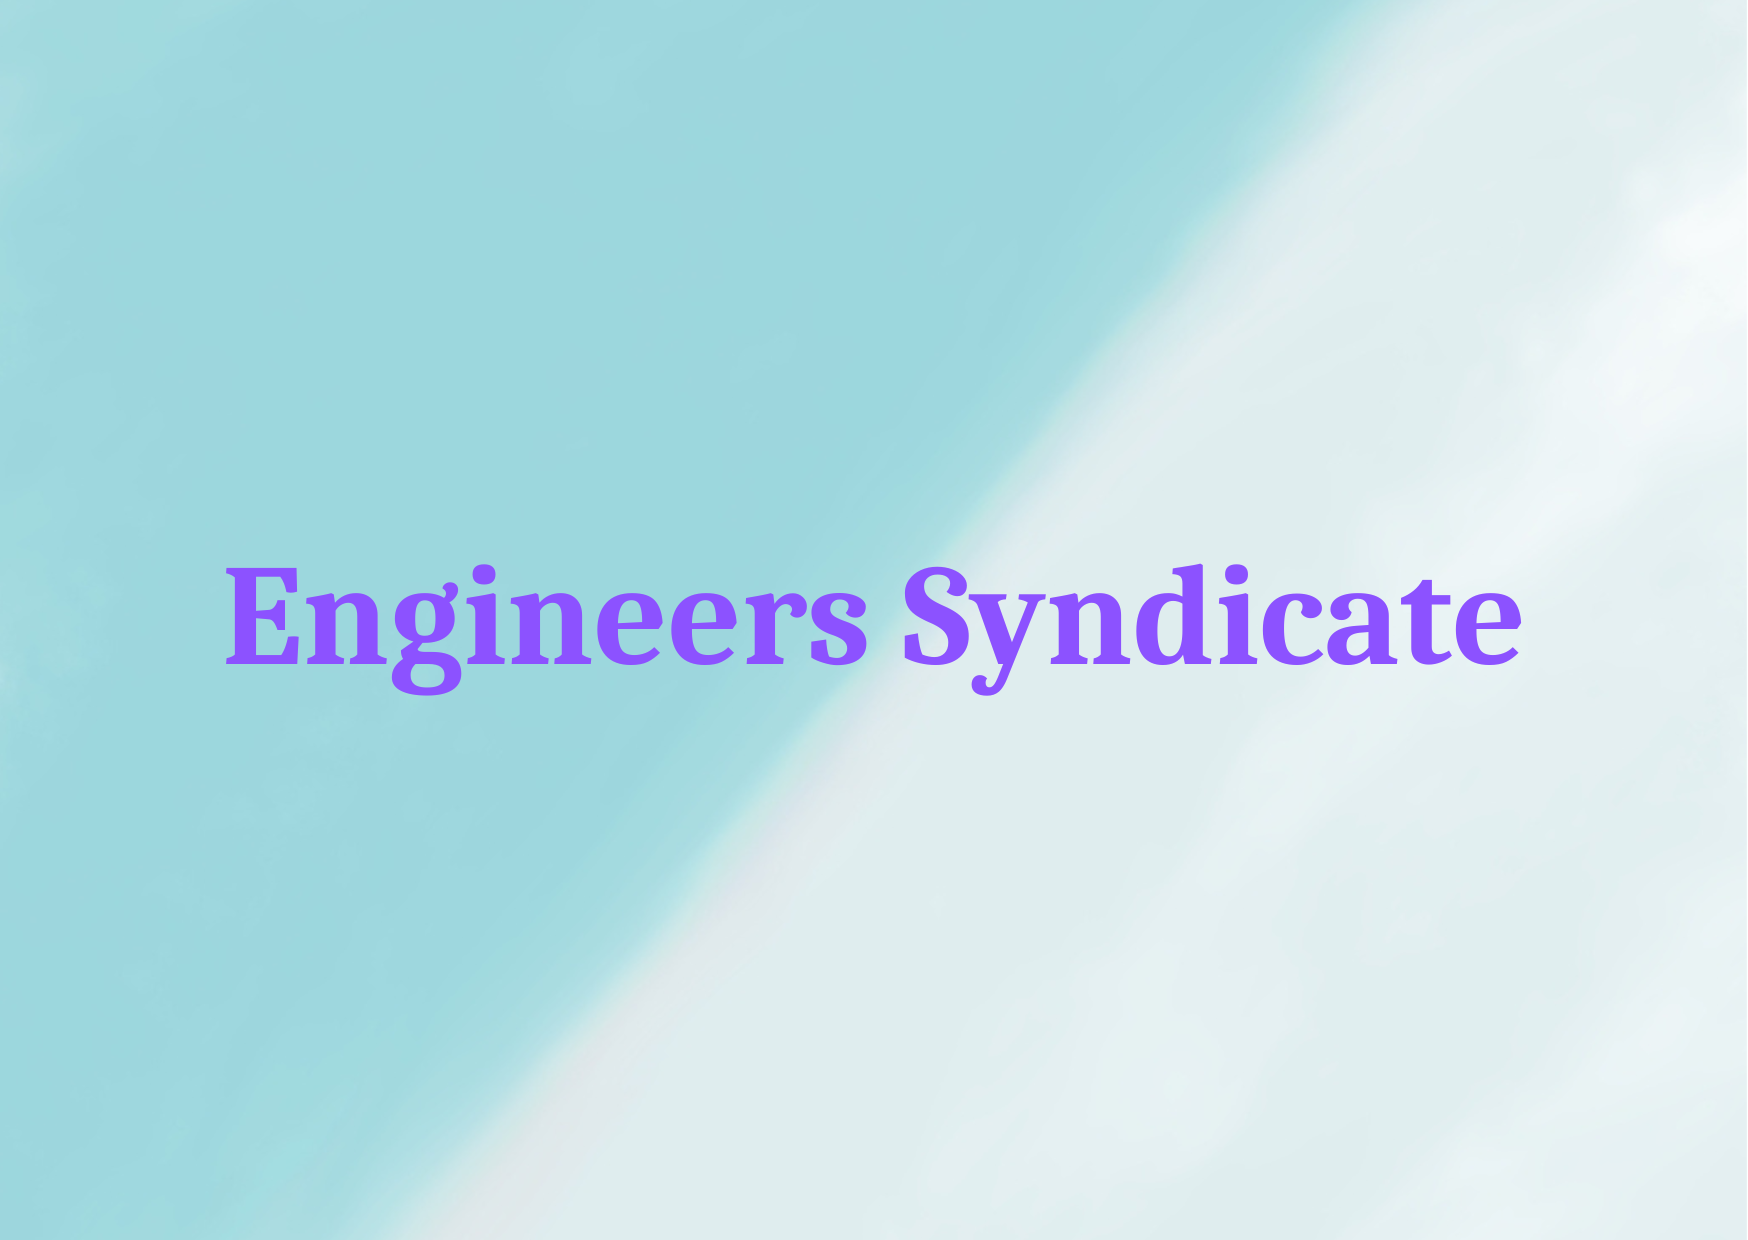  Engineers Syndicate 